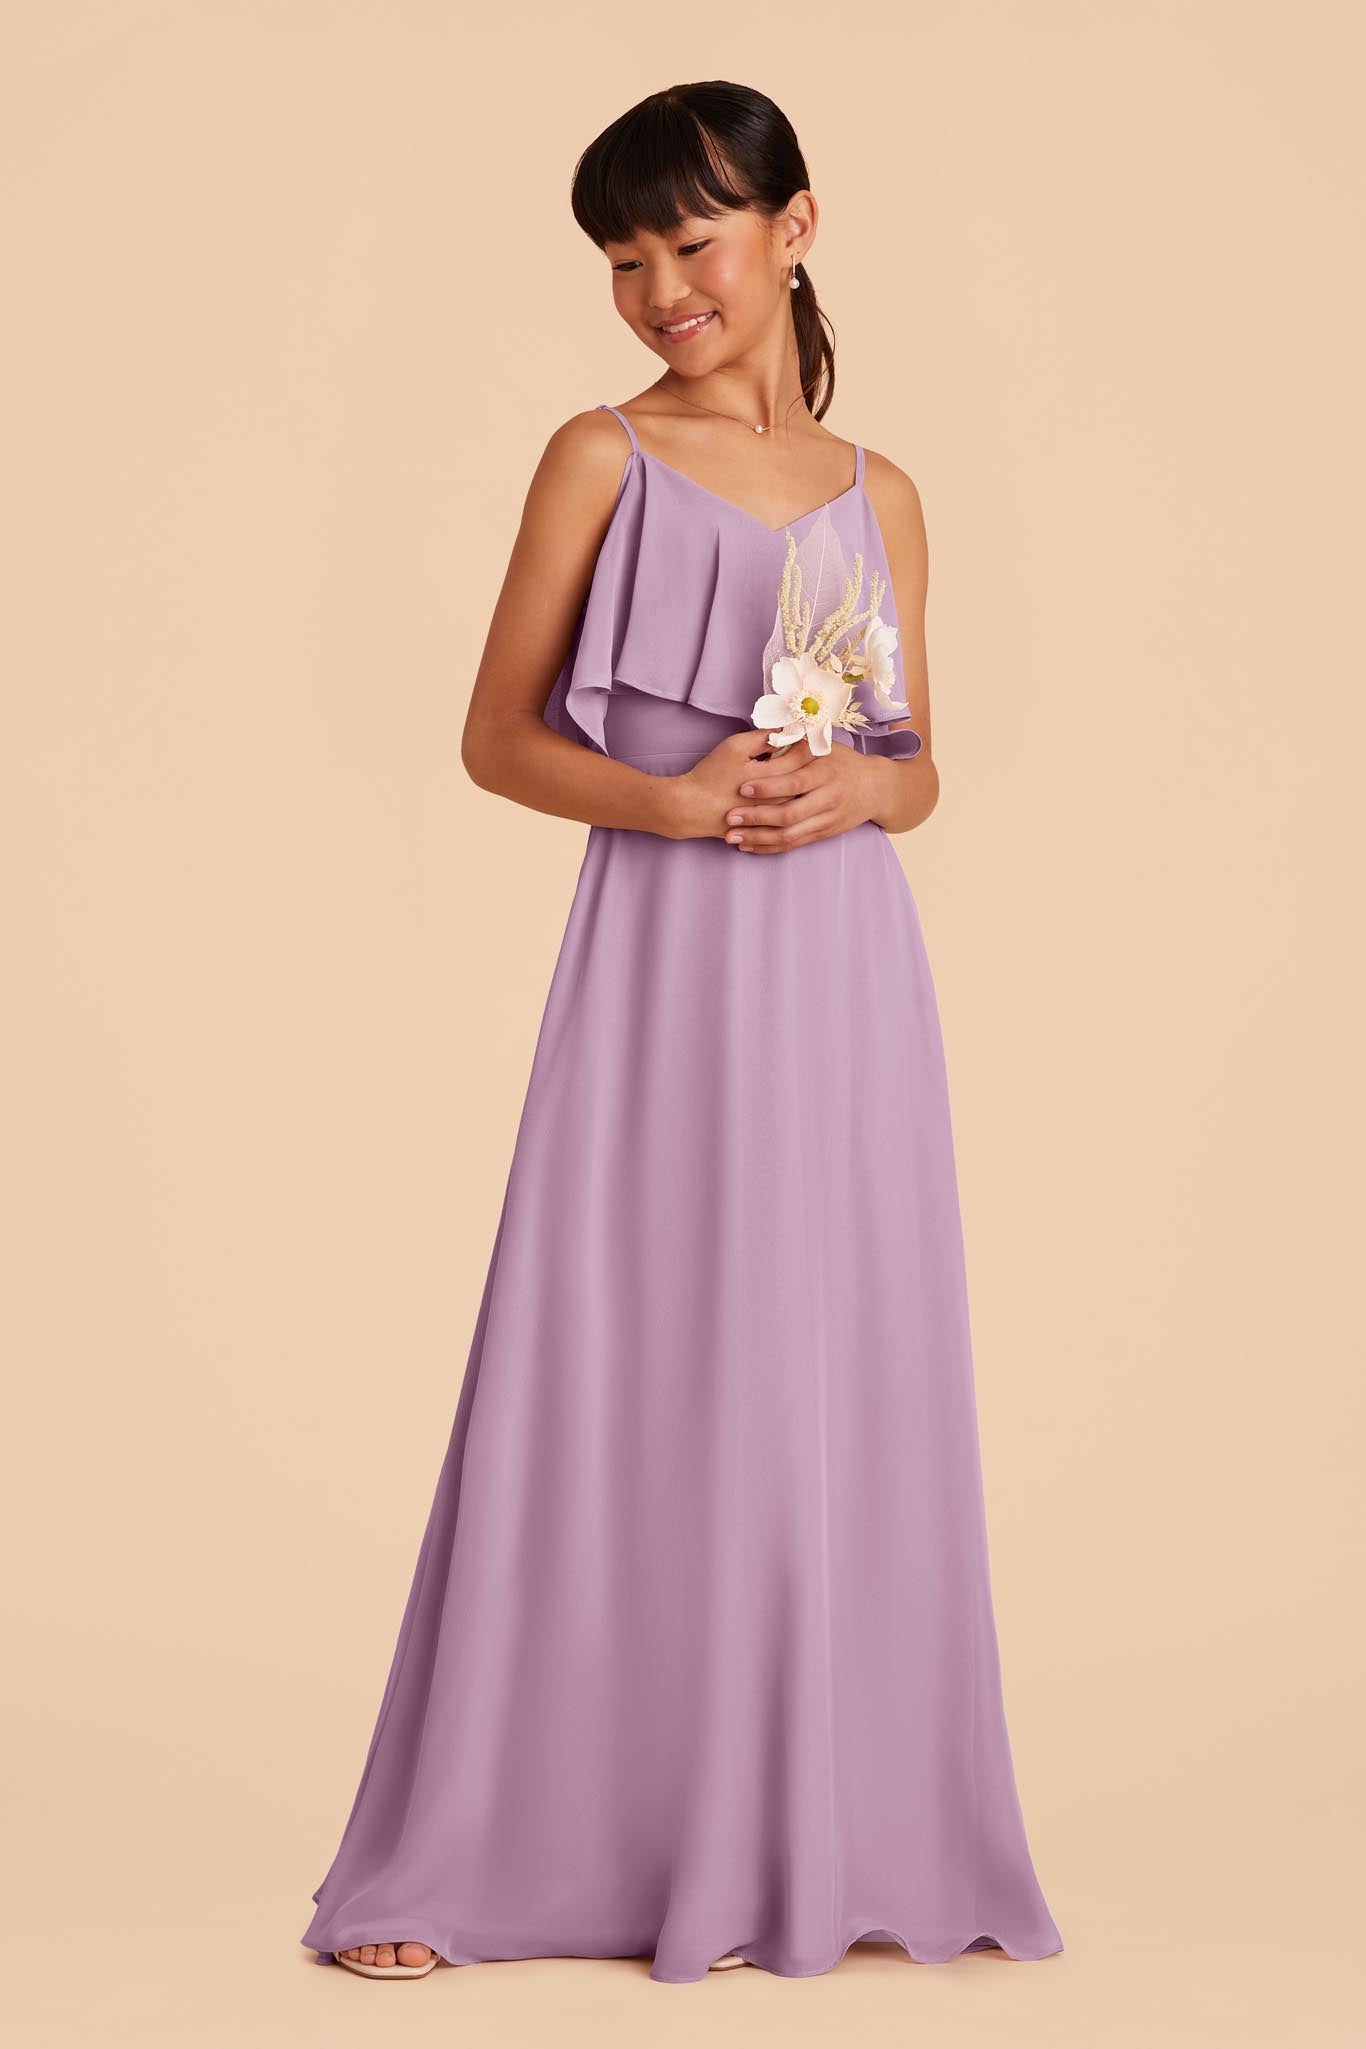 Lavender Janie Convertible Junior Dress by Birdy Grey